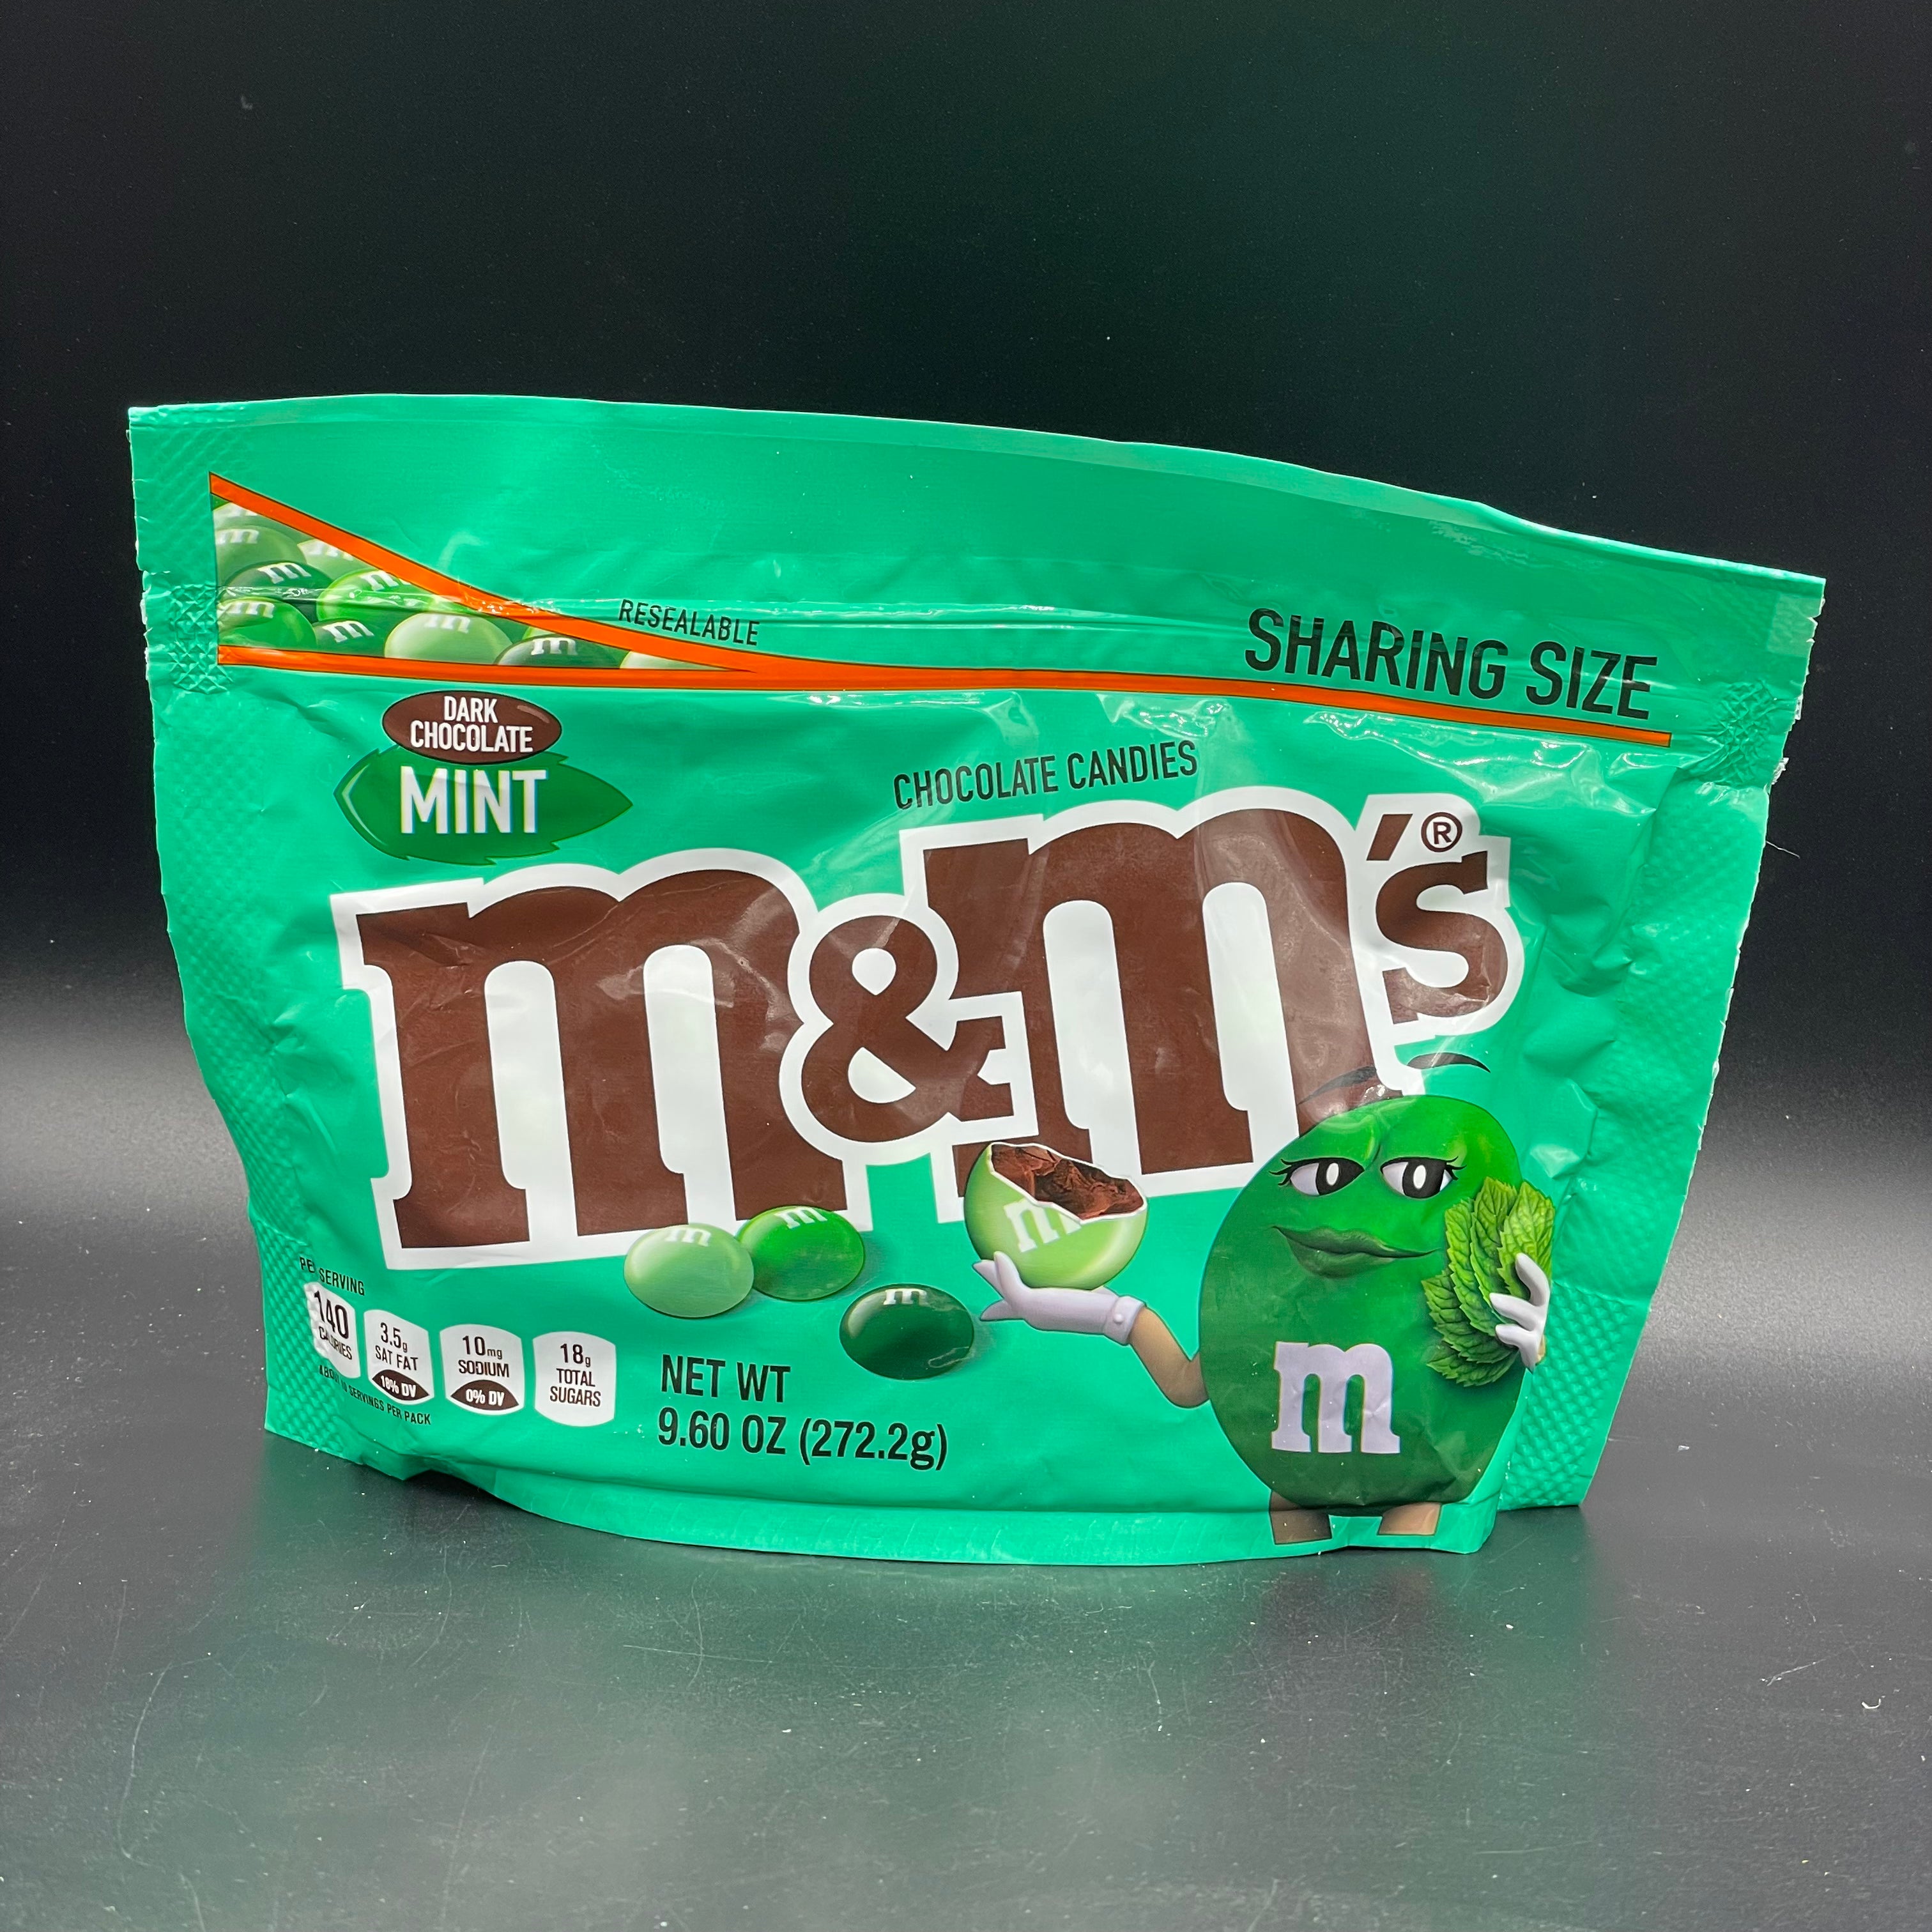 M&M's Dark Chocolate Mint Sharing Size